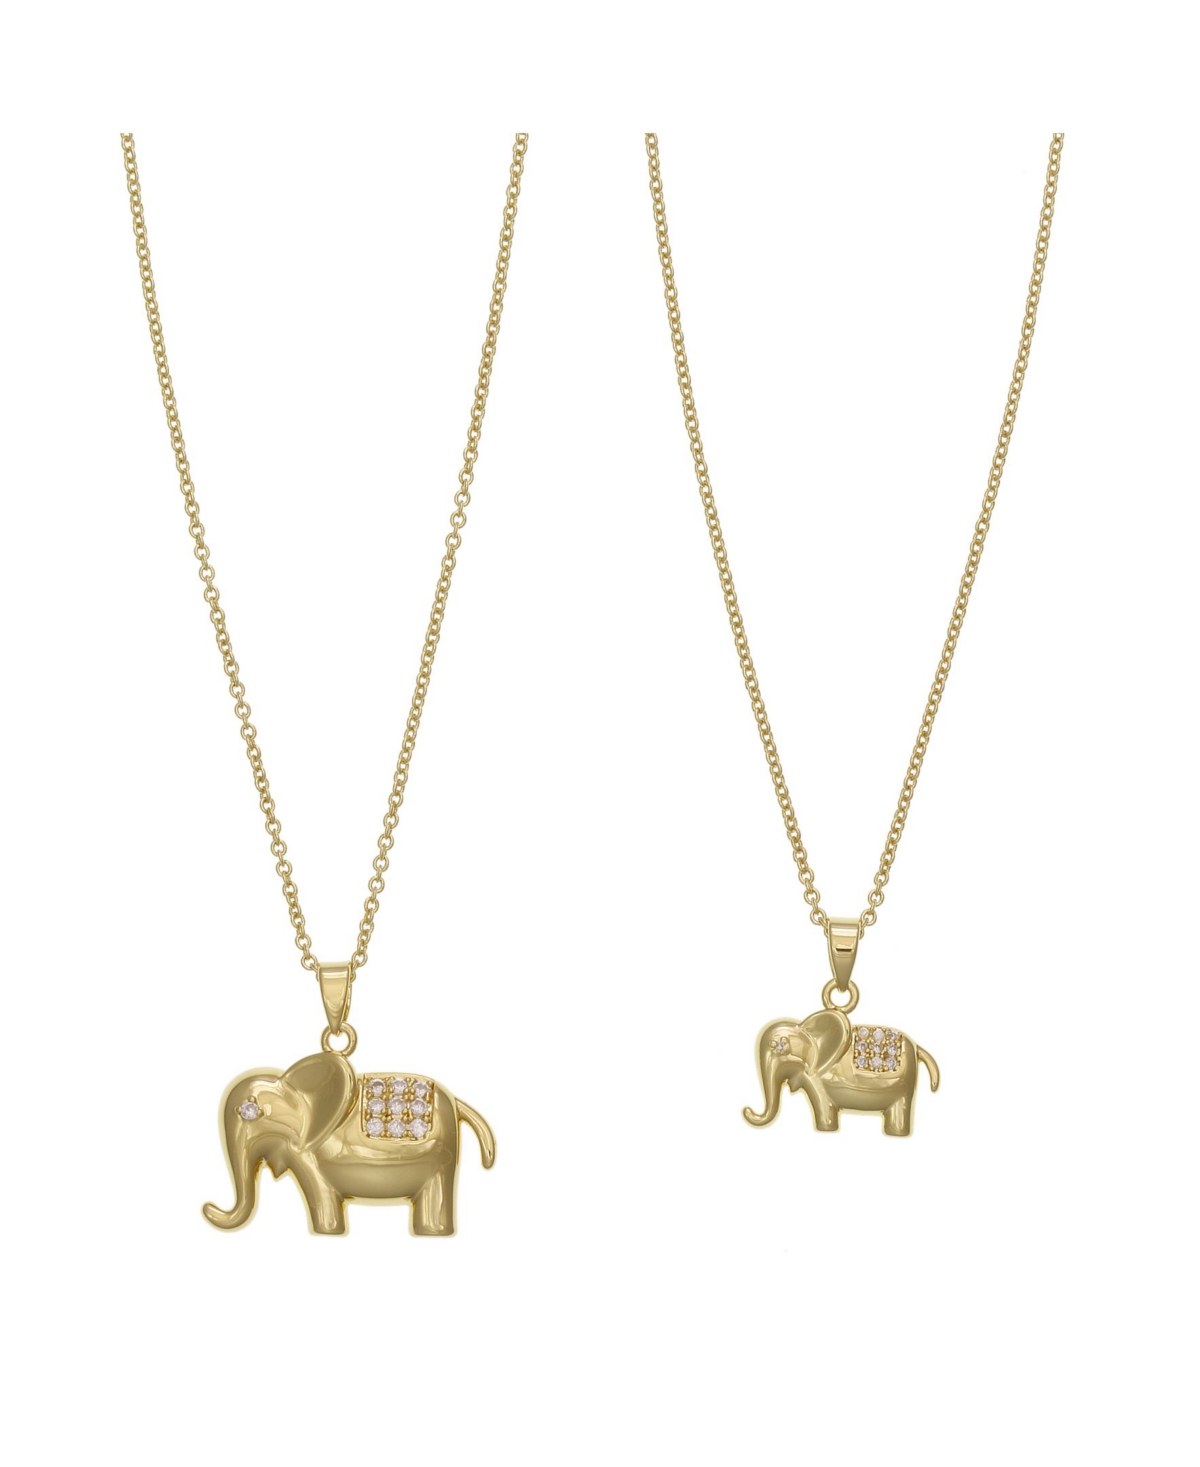 Women's Elephant Shape Pendant Necklace Set - Gold-Tone